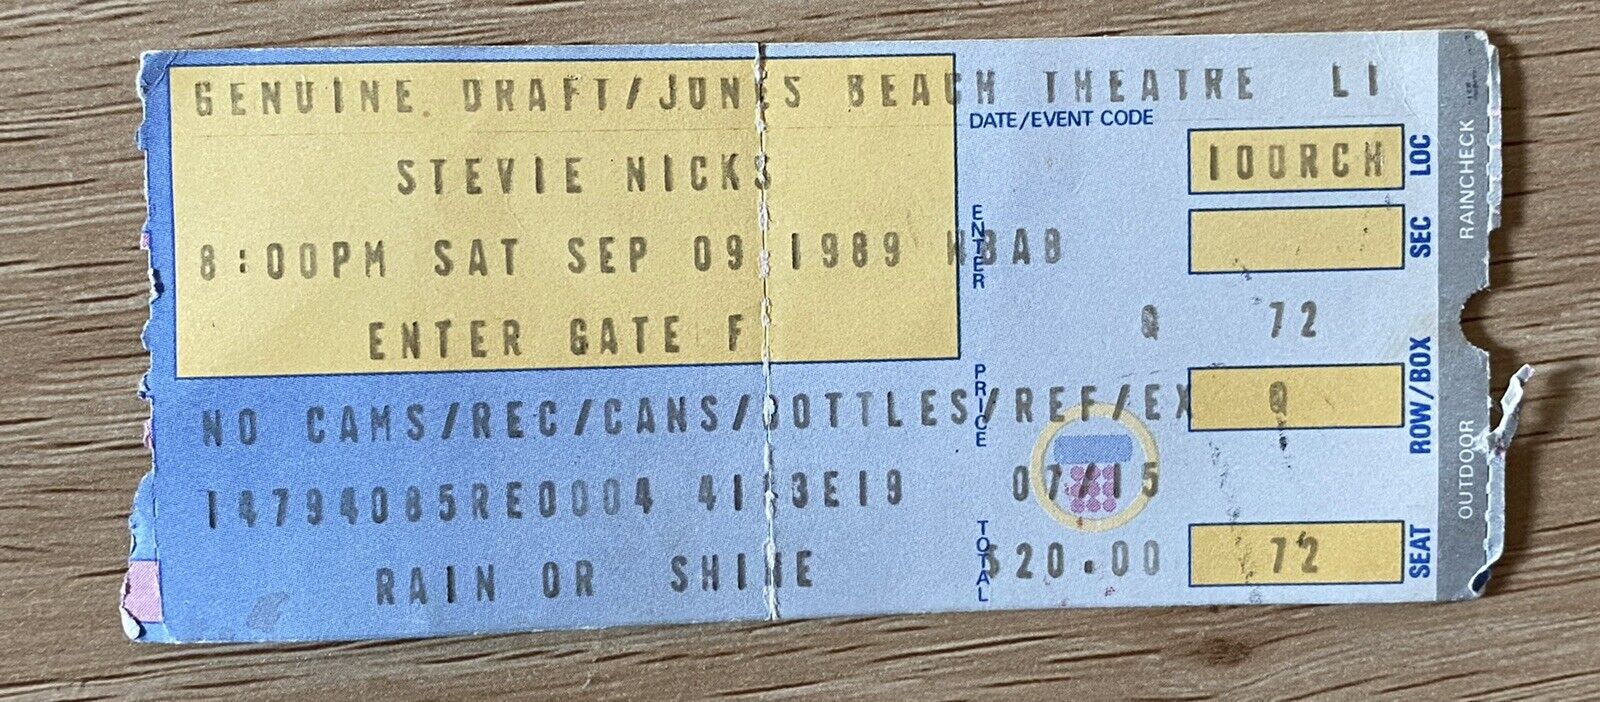 RARE Stevie Nicks Ticket Sept 9, 1989 Jones Beach Theater NY Fleetwood Mac